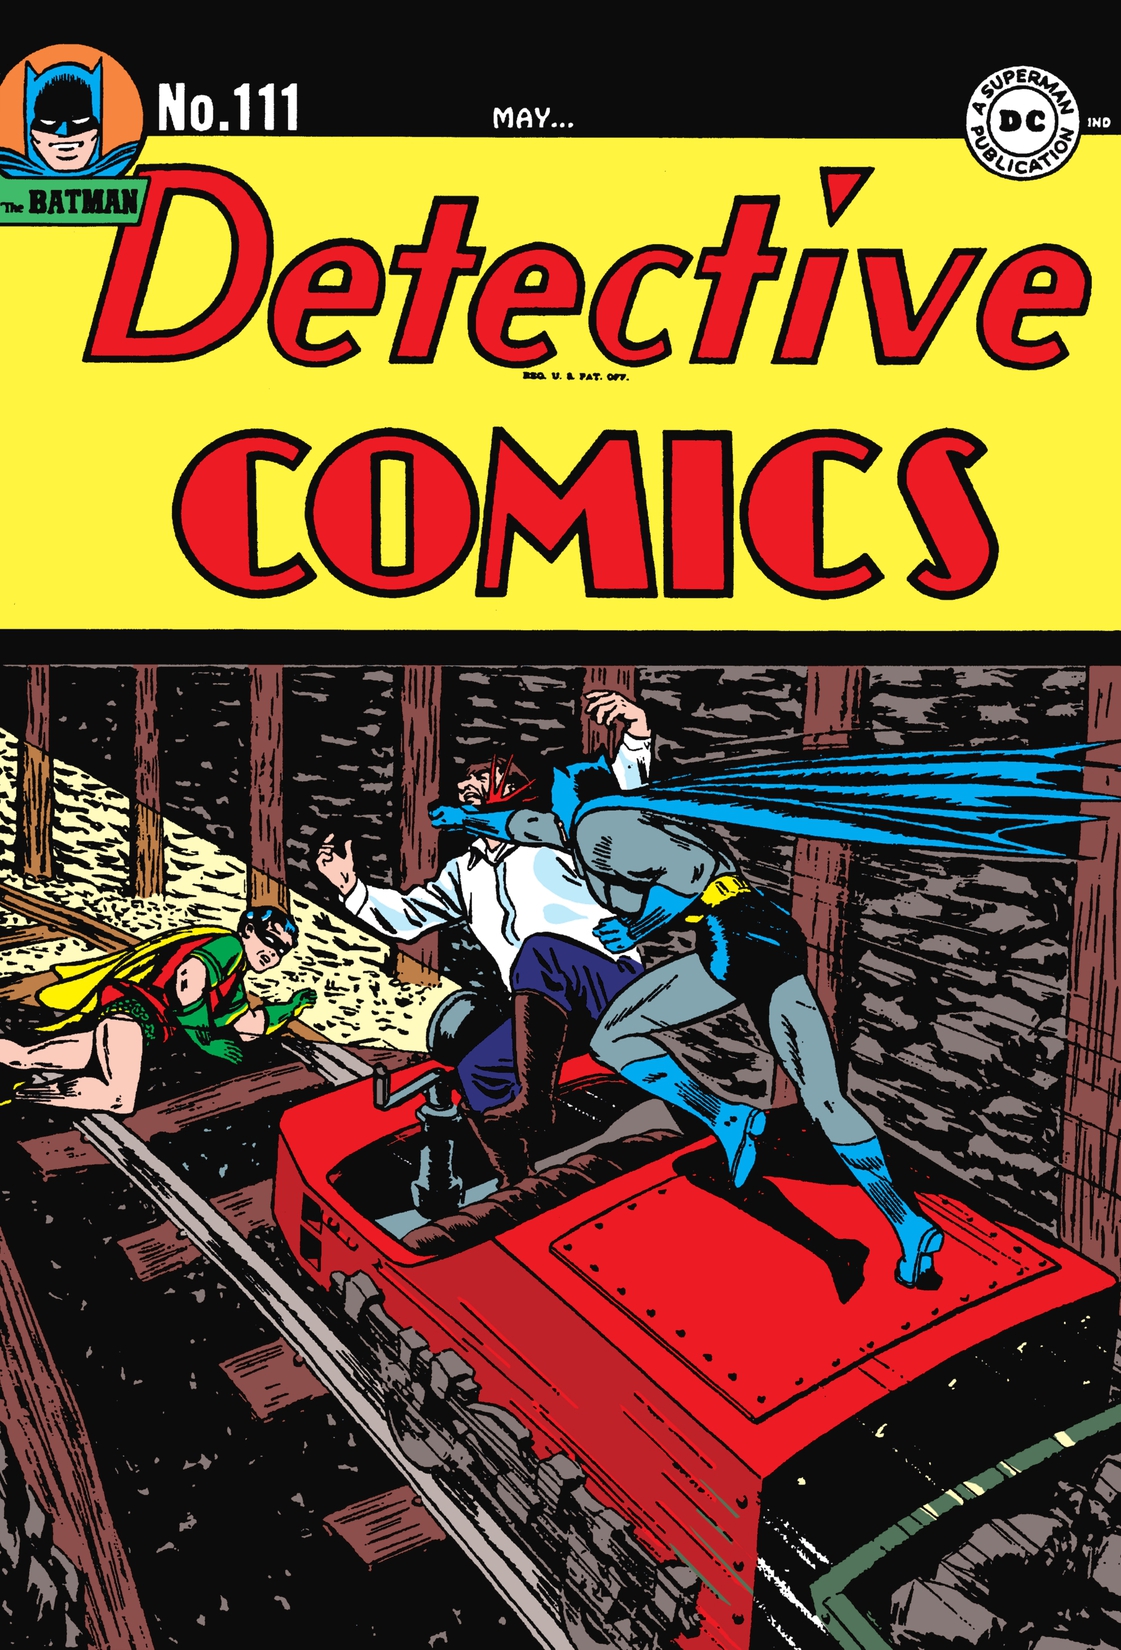 Detective Comics (1937-2011) #111 preview images